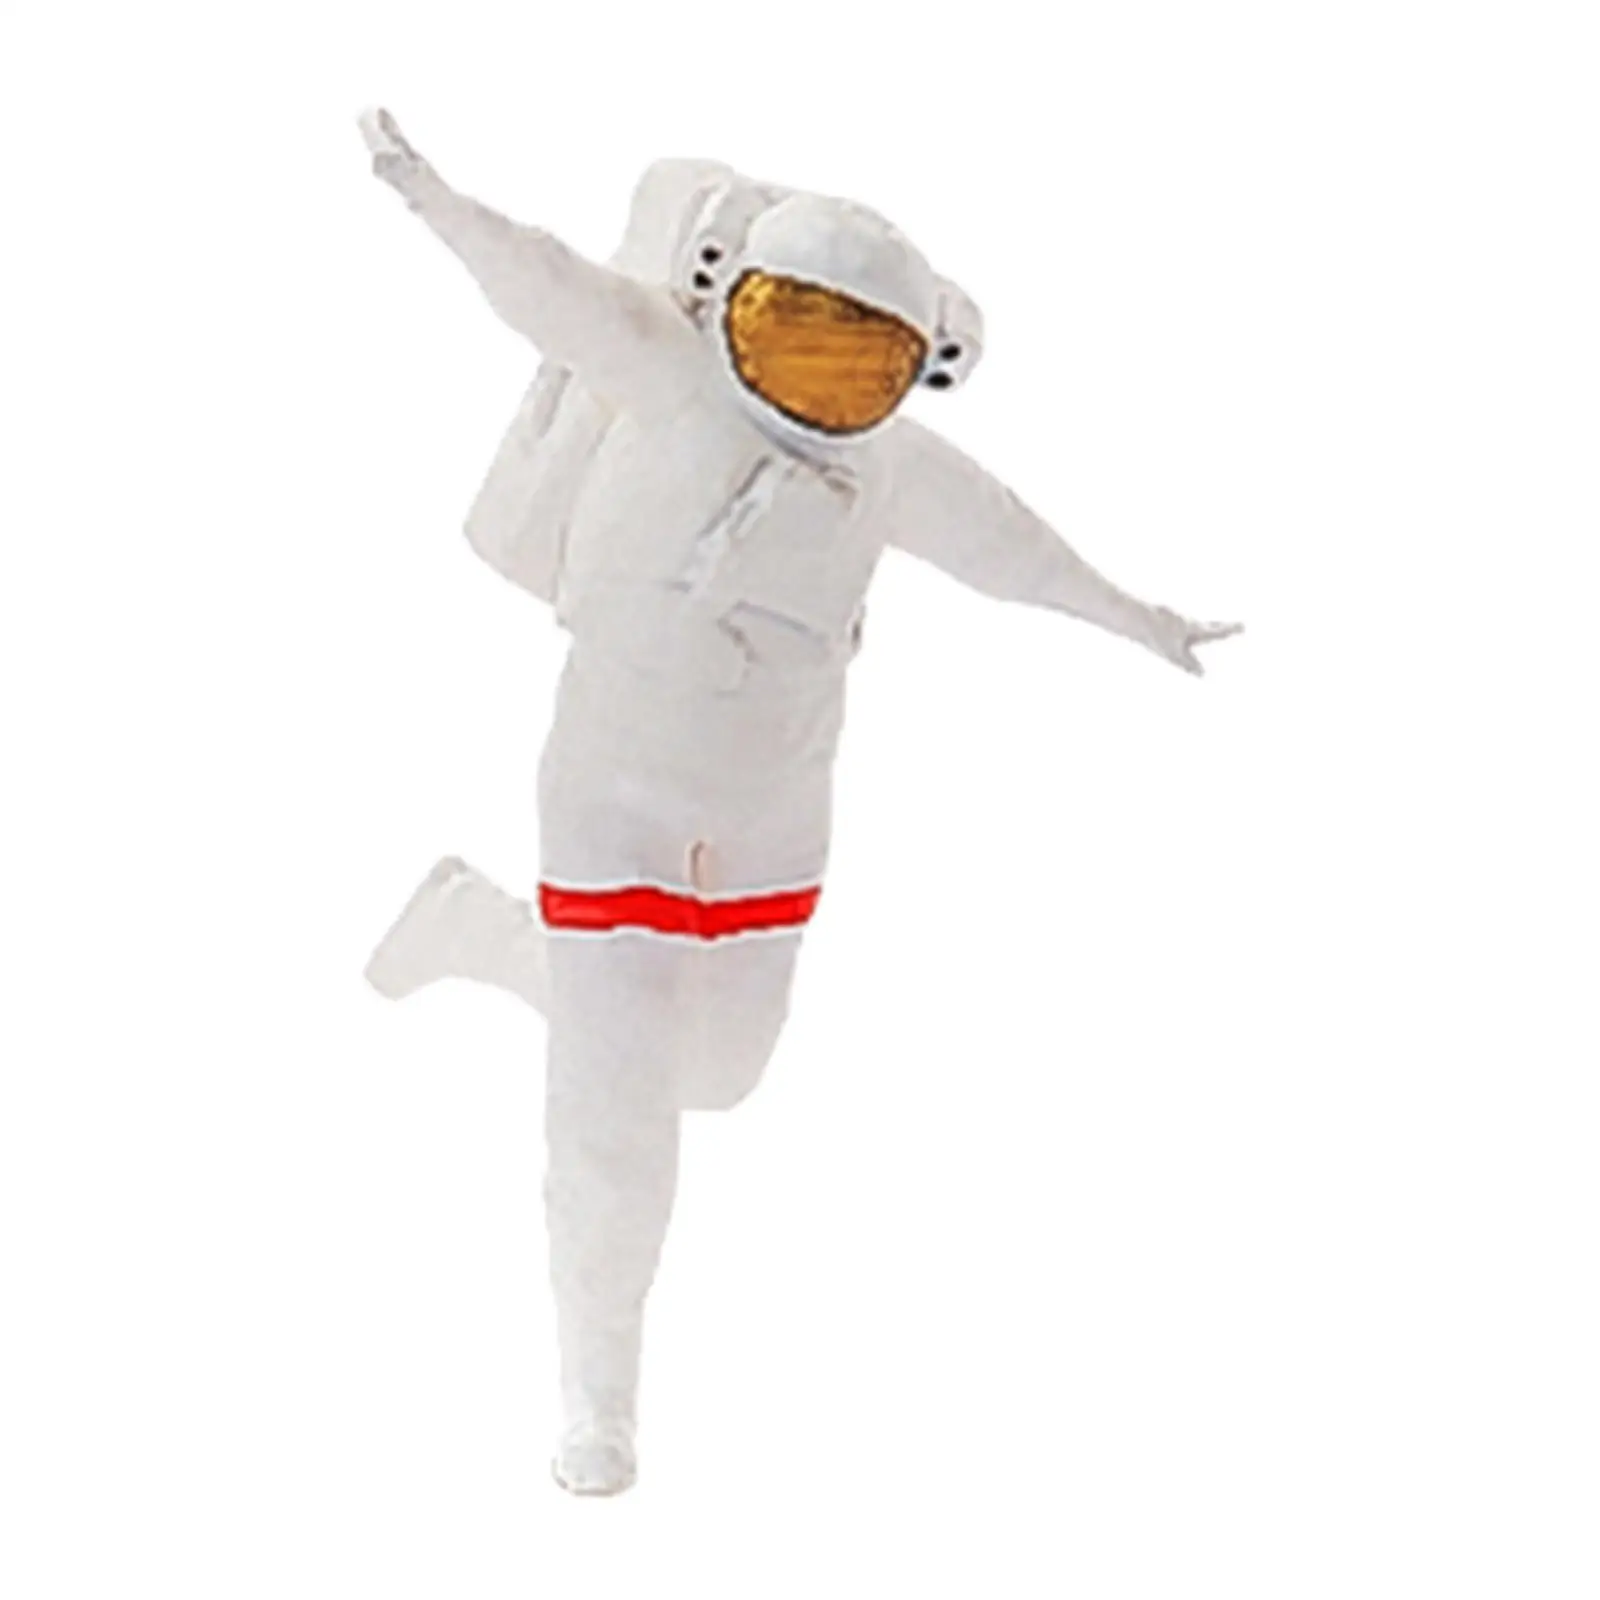 1:64 Scale Spaceman Figure Space Theme Astronaut Doll Miniature Street Scene Fairy Garden Desktop Ornament Layout